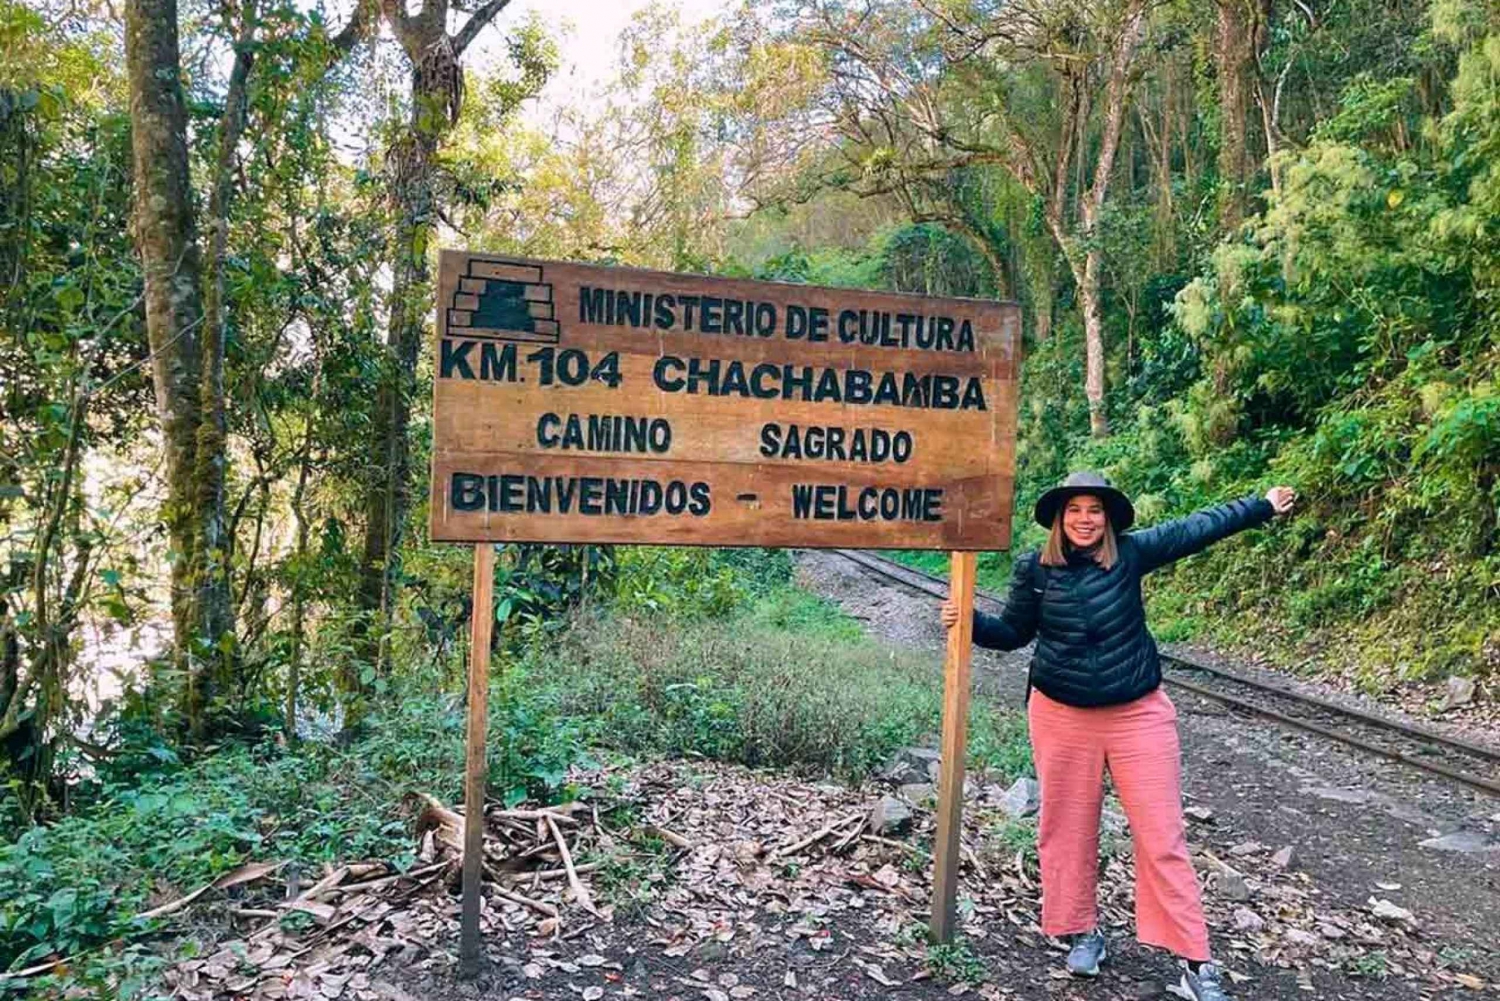 Smoll Group | Inka Trail 2 dage - ny rute til Machu Picchu